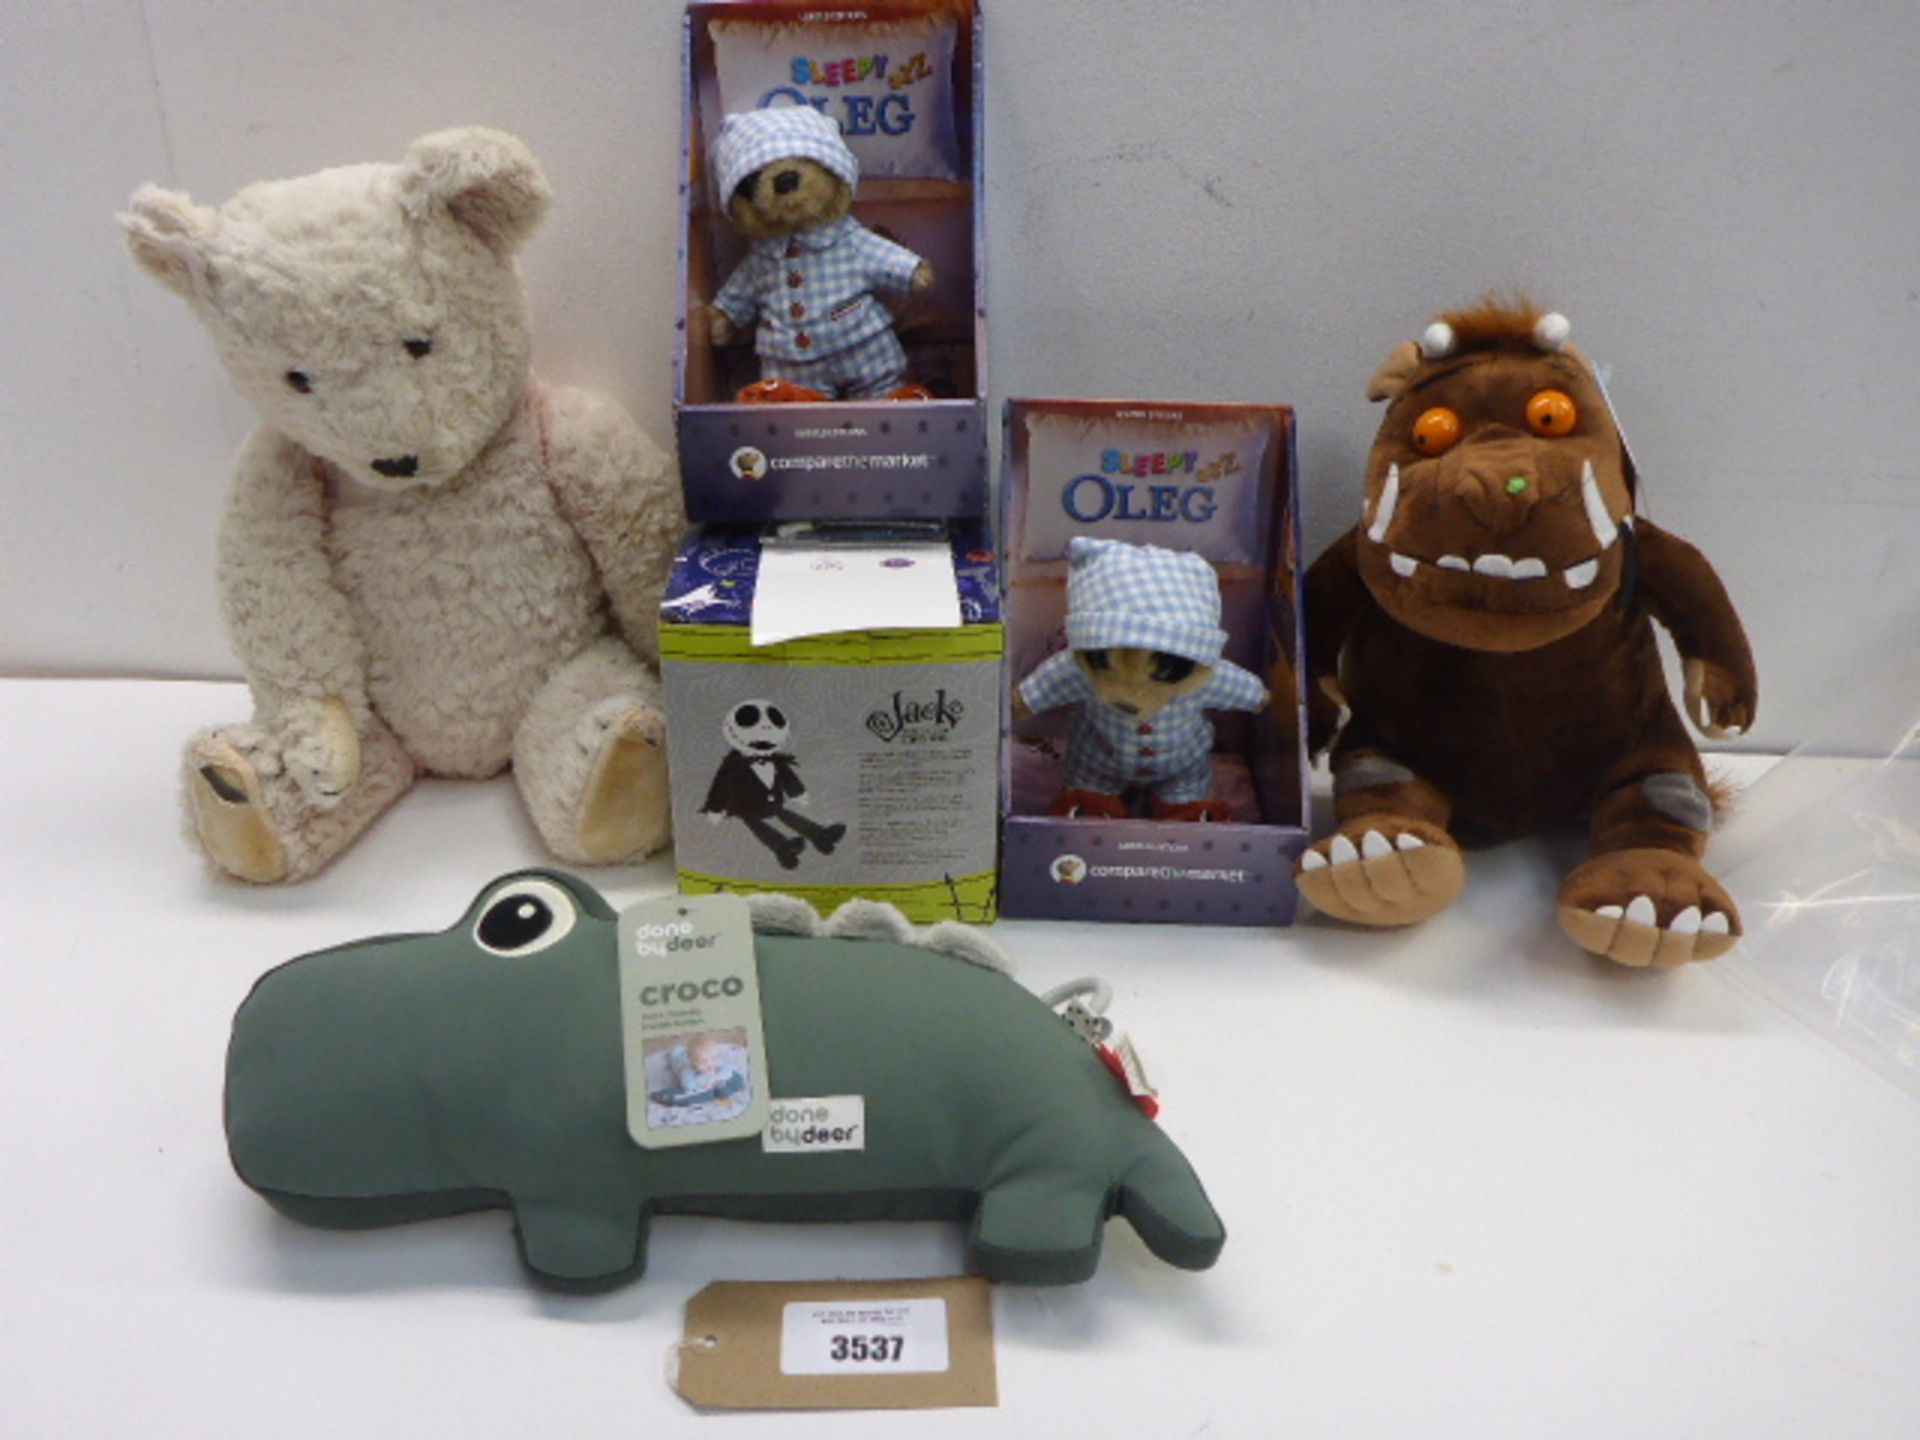 2 Sleepy Oleg meerkat soft toys, Gruffalo, Jack Scentsy buddy, Croco sensory toy and large teddy